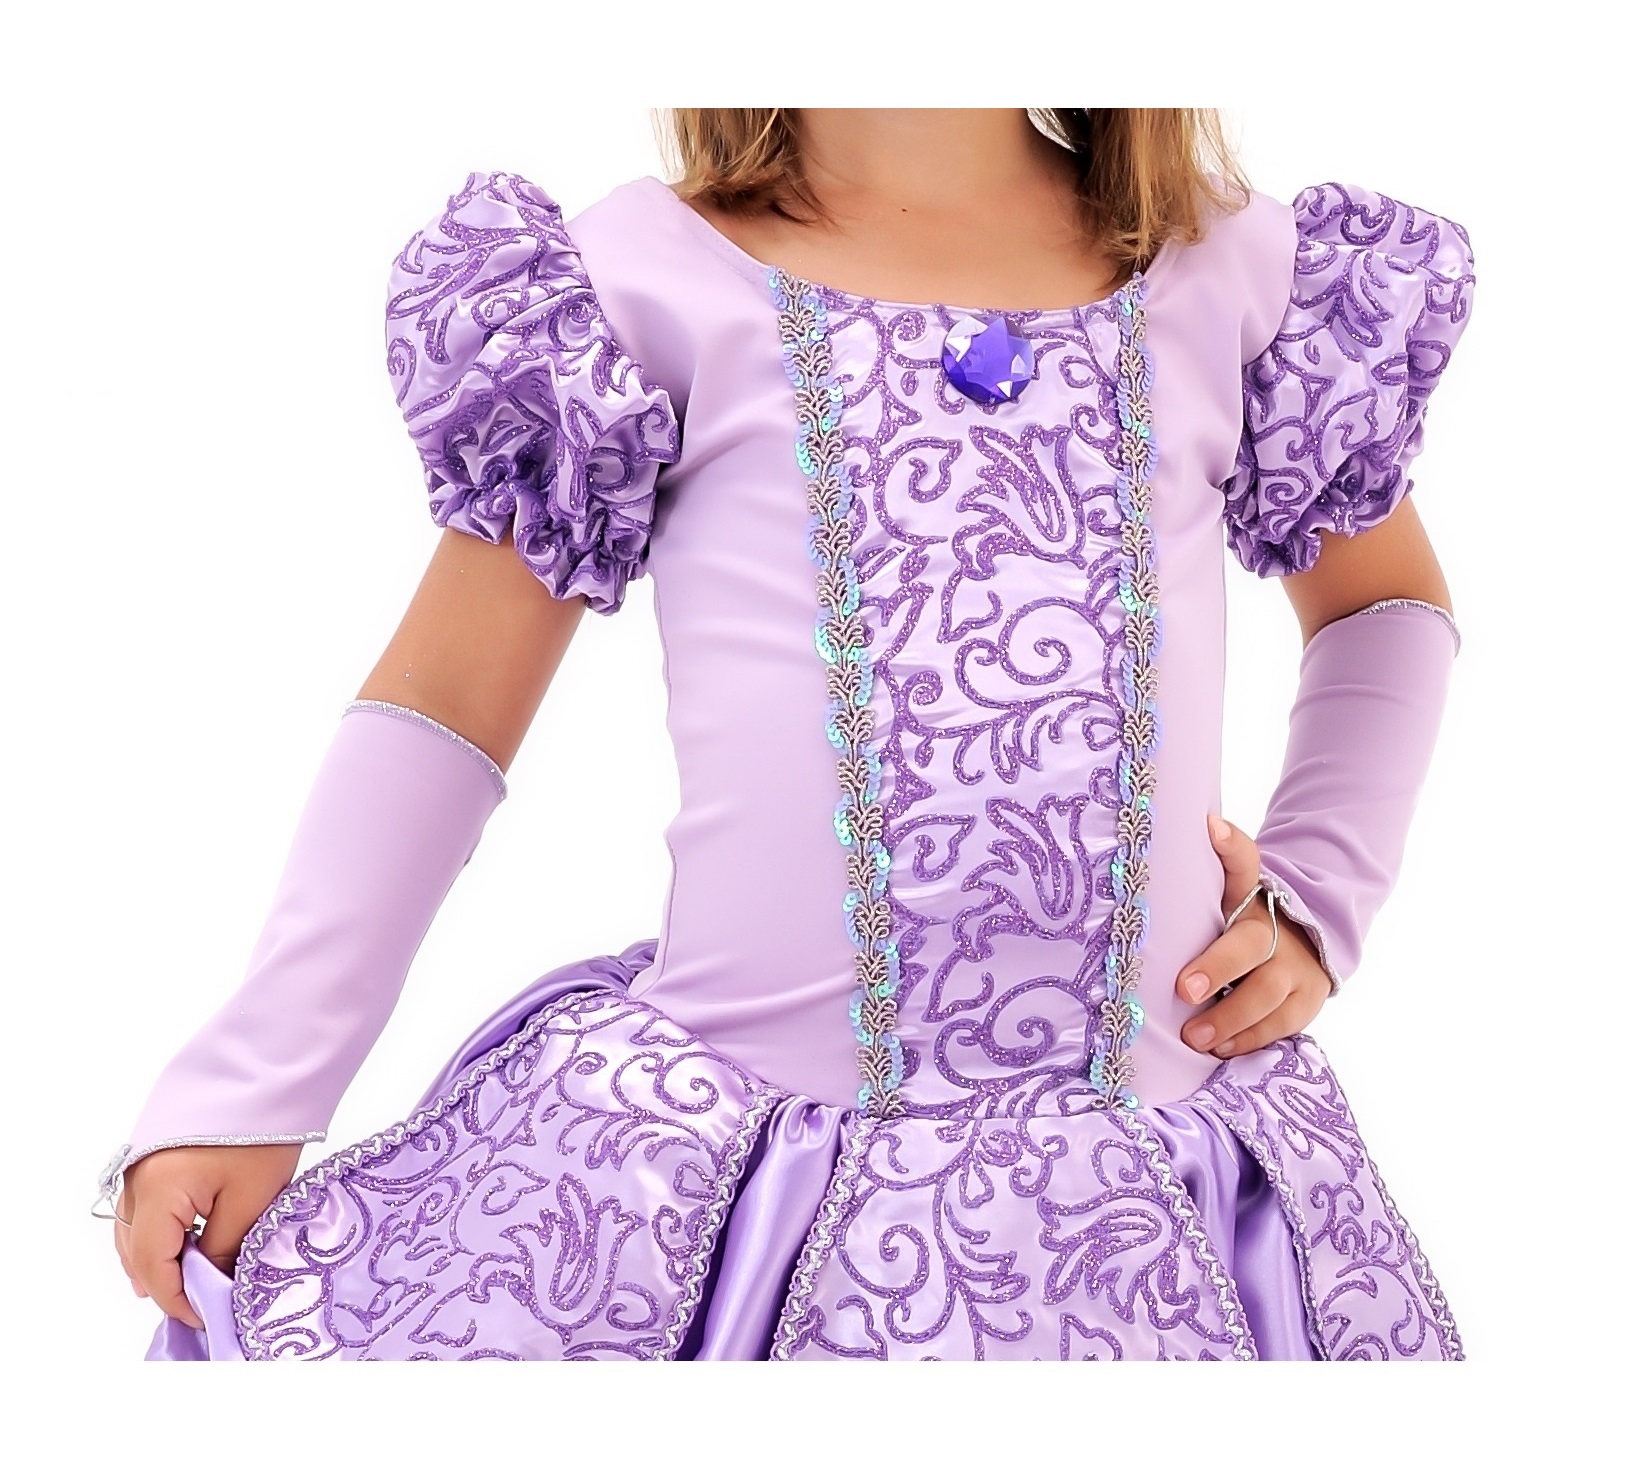 Fantasia Vestido Luxo Infantil Princesa Sofia / Rapunzel C/ Tiara